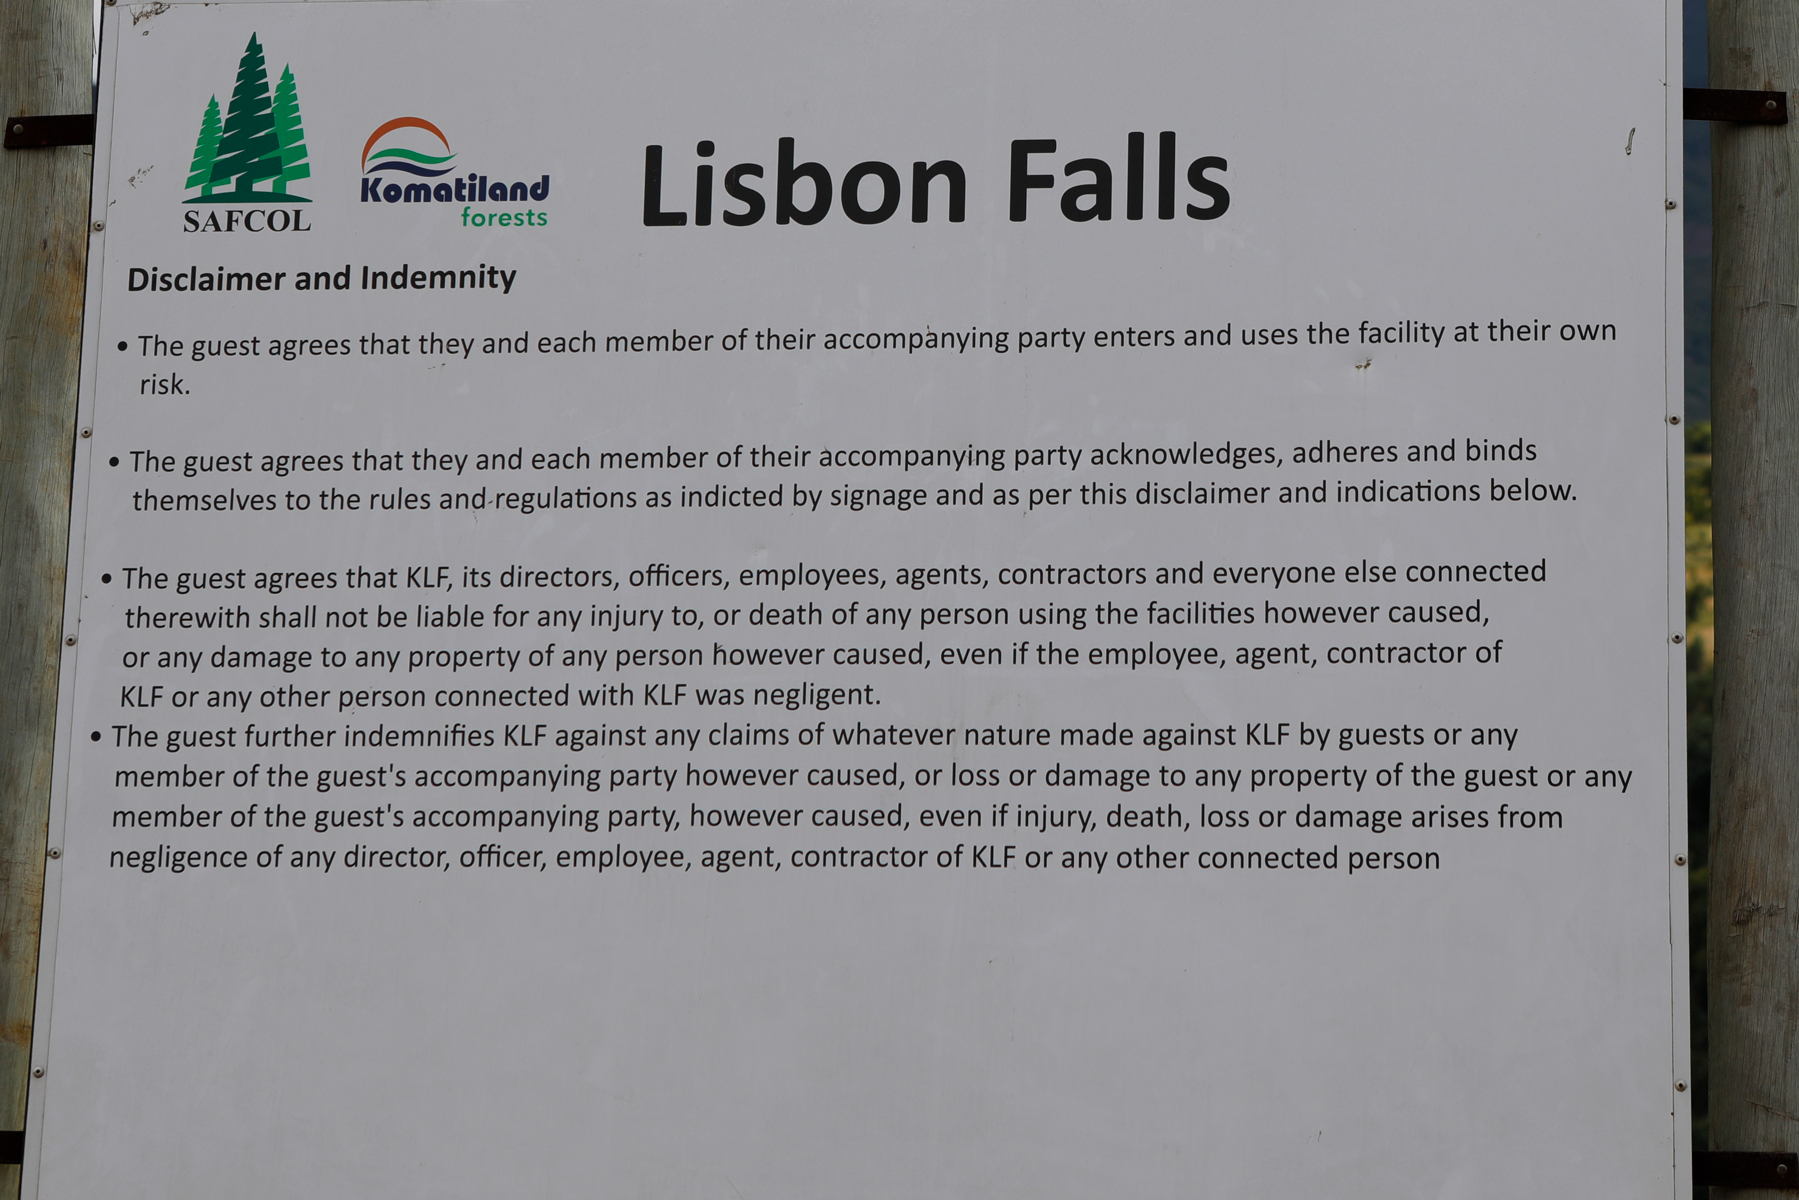 Lisbon Falls